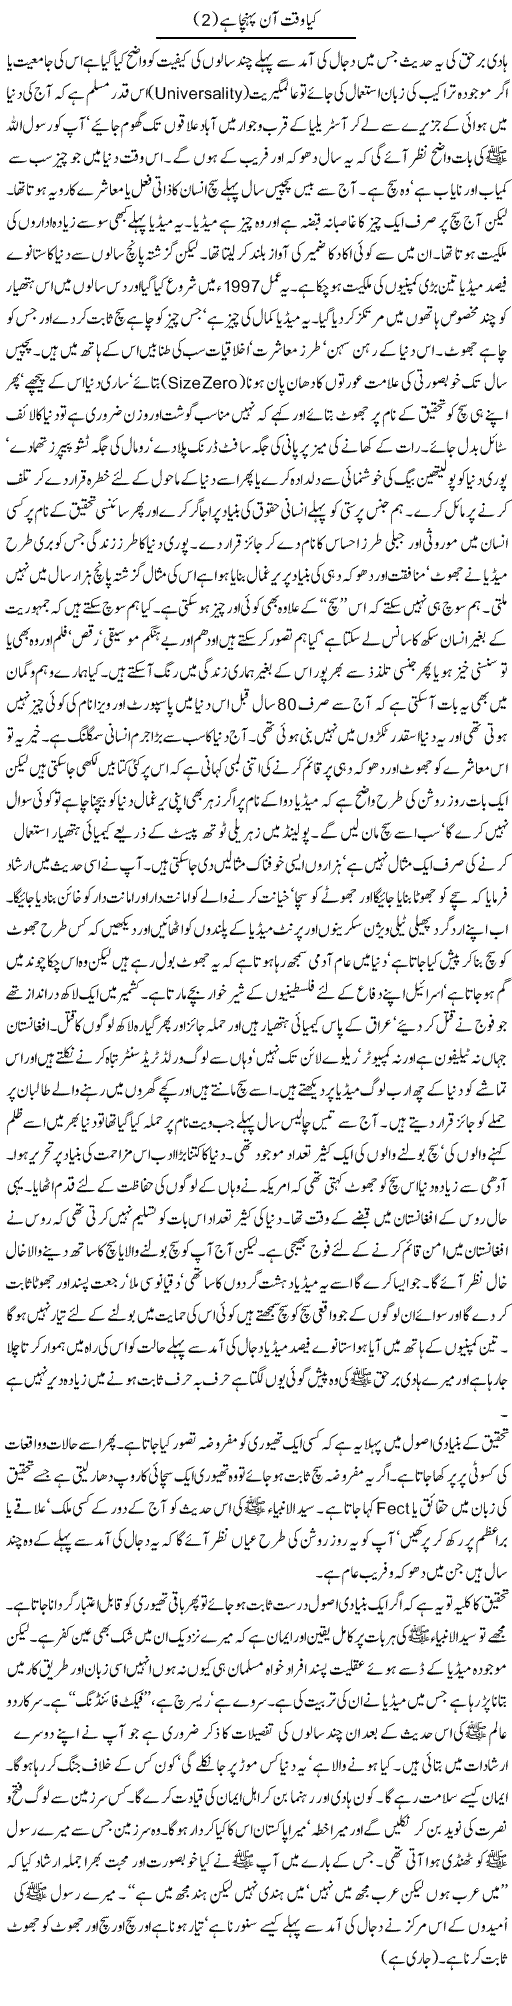 Sayings of Muhammad SAW Express Column Orya Maqbool 8 October 2011